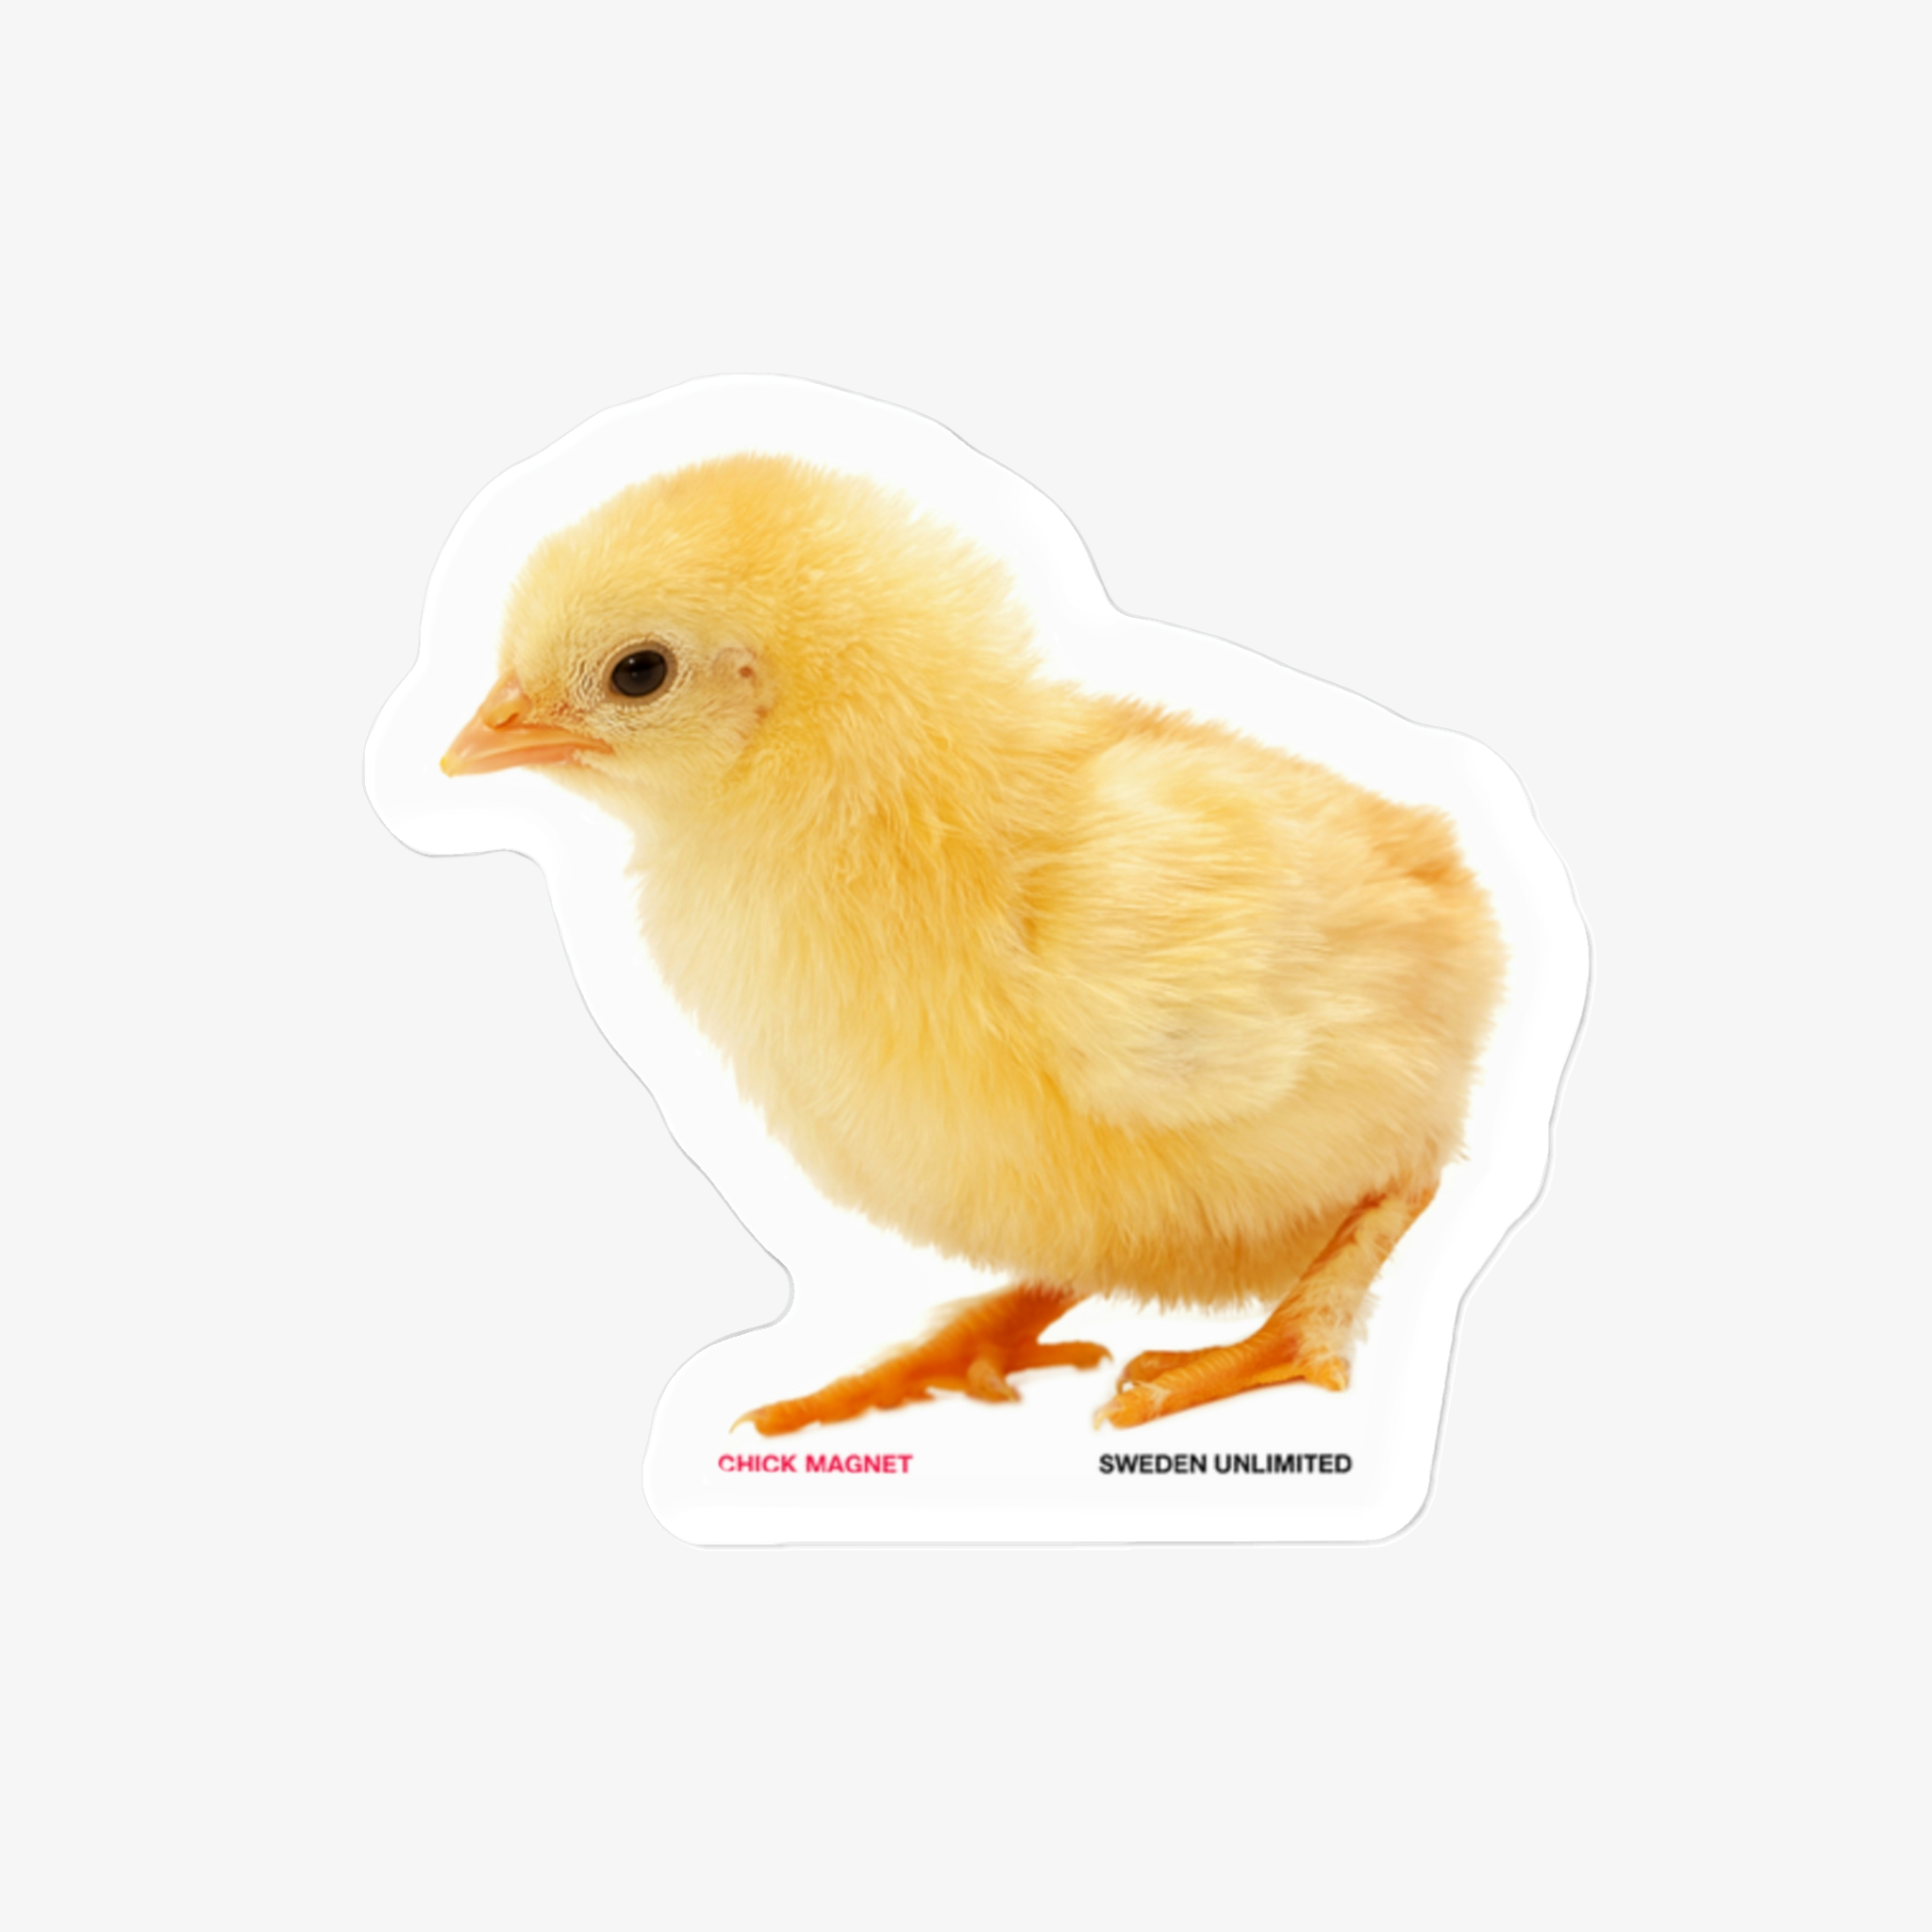 Chick Magnet – Unlimited Shop